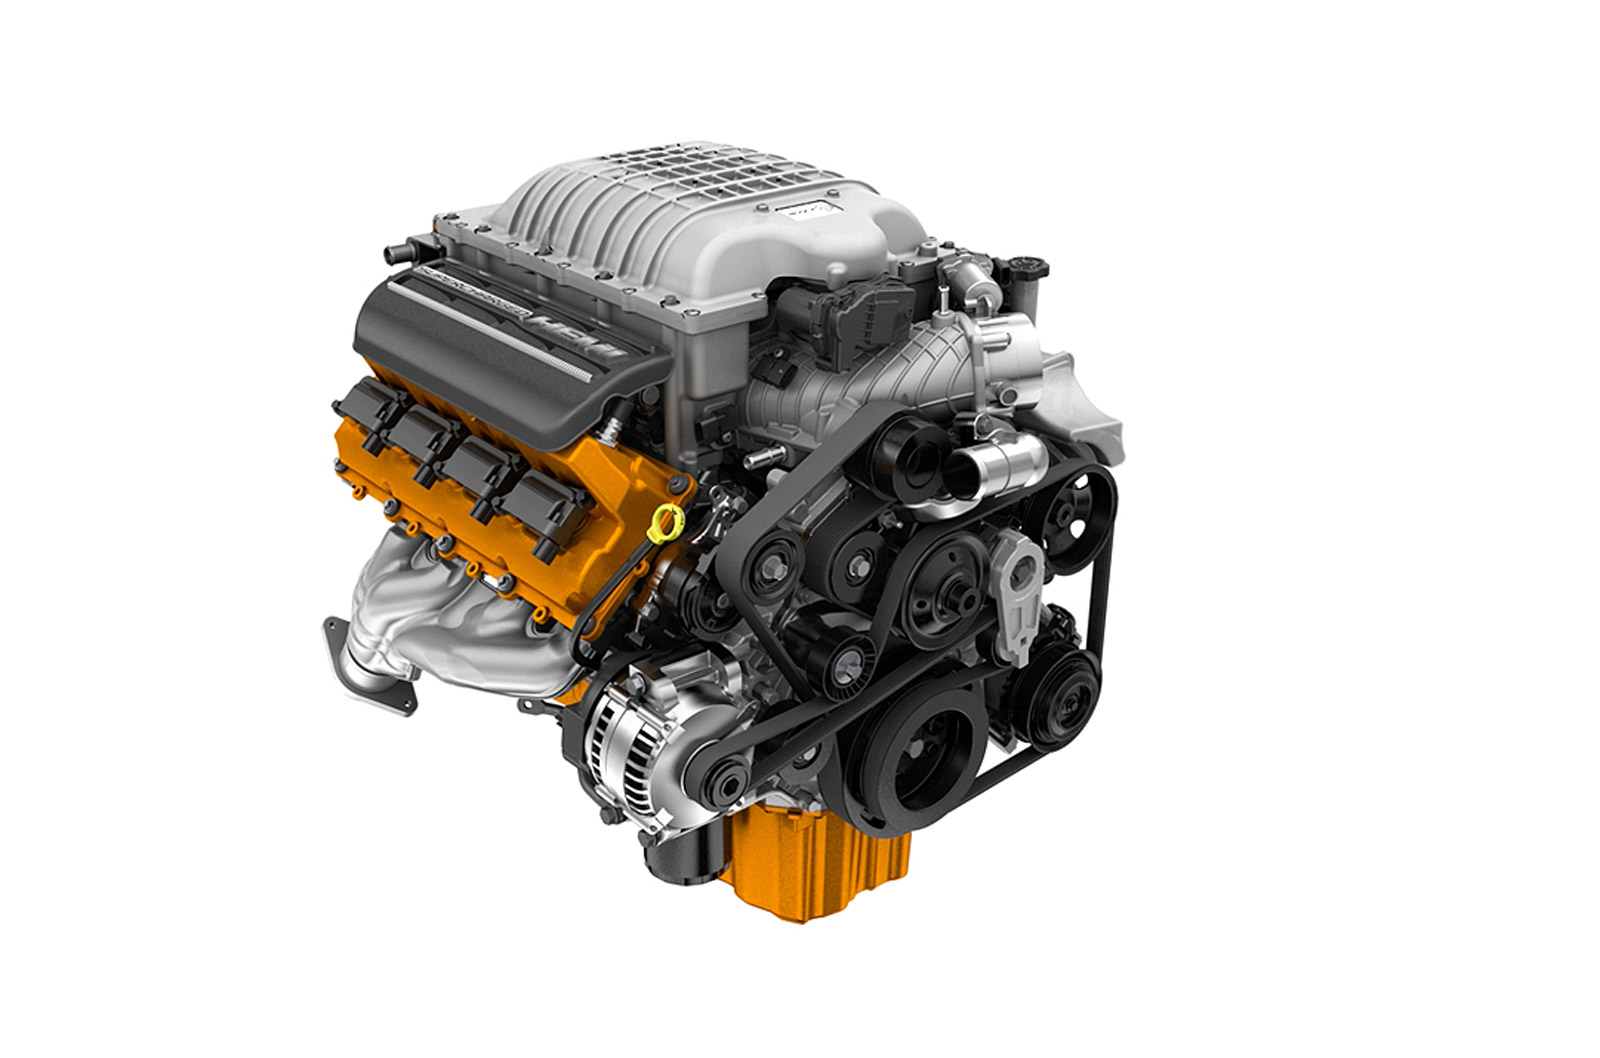 Мотор челленджер. Двигатель Hemi v8 6.2. Мотор Hemi 6.2. 6.2 Hemi v8 Hellcat. Dodge Challenger мотор 6.2.